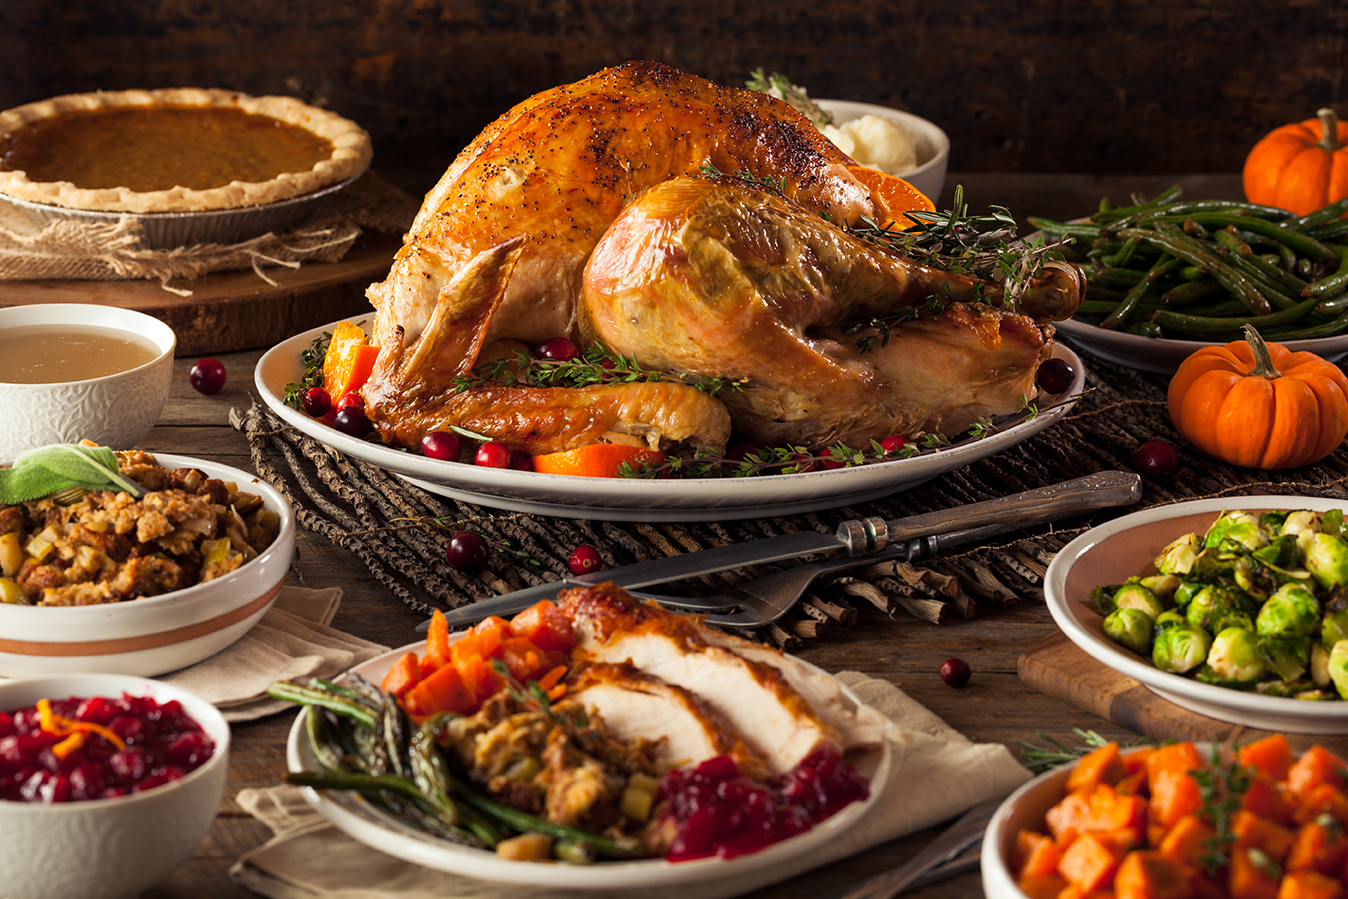 https://www.foodsafety.gov/sites/default/files/2021-11/preparing-your-holiday-turkey-safely.jpg